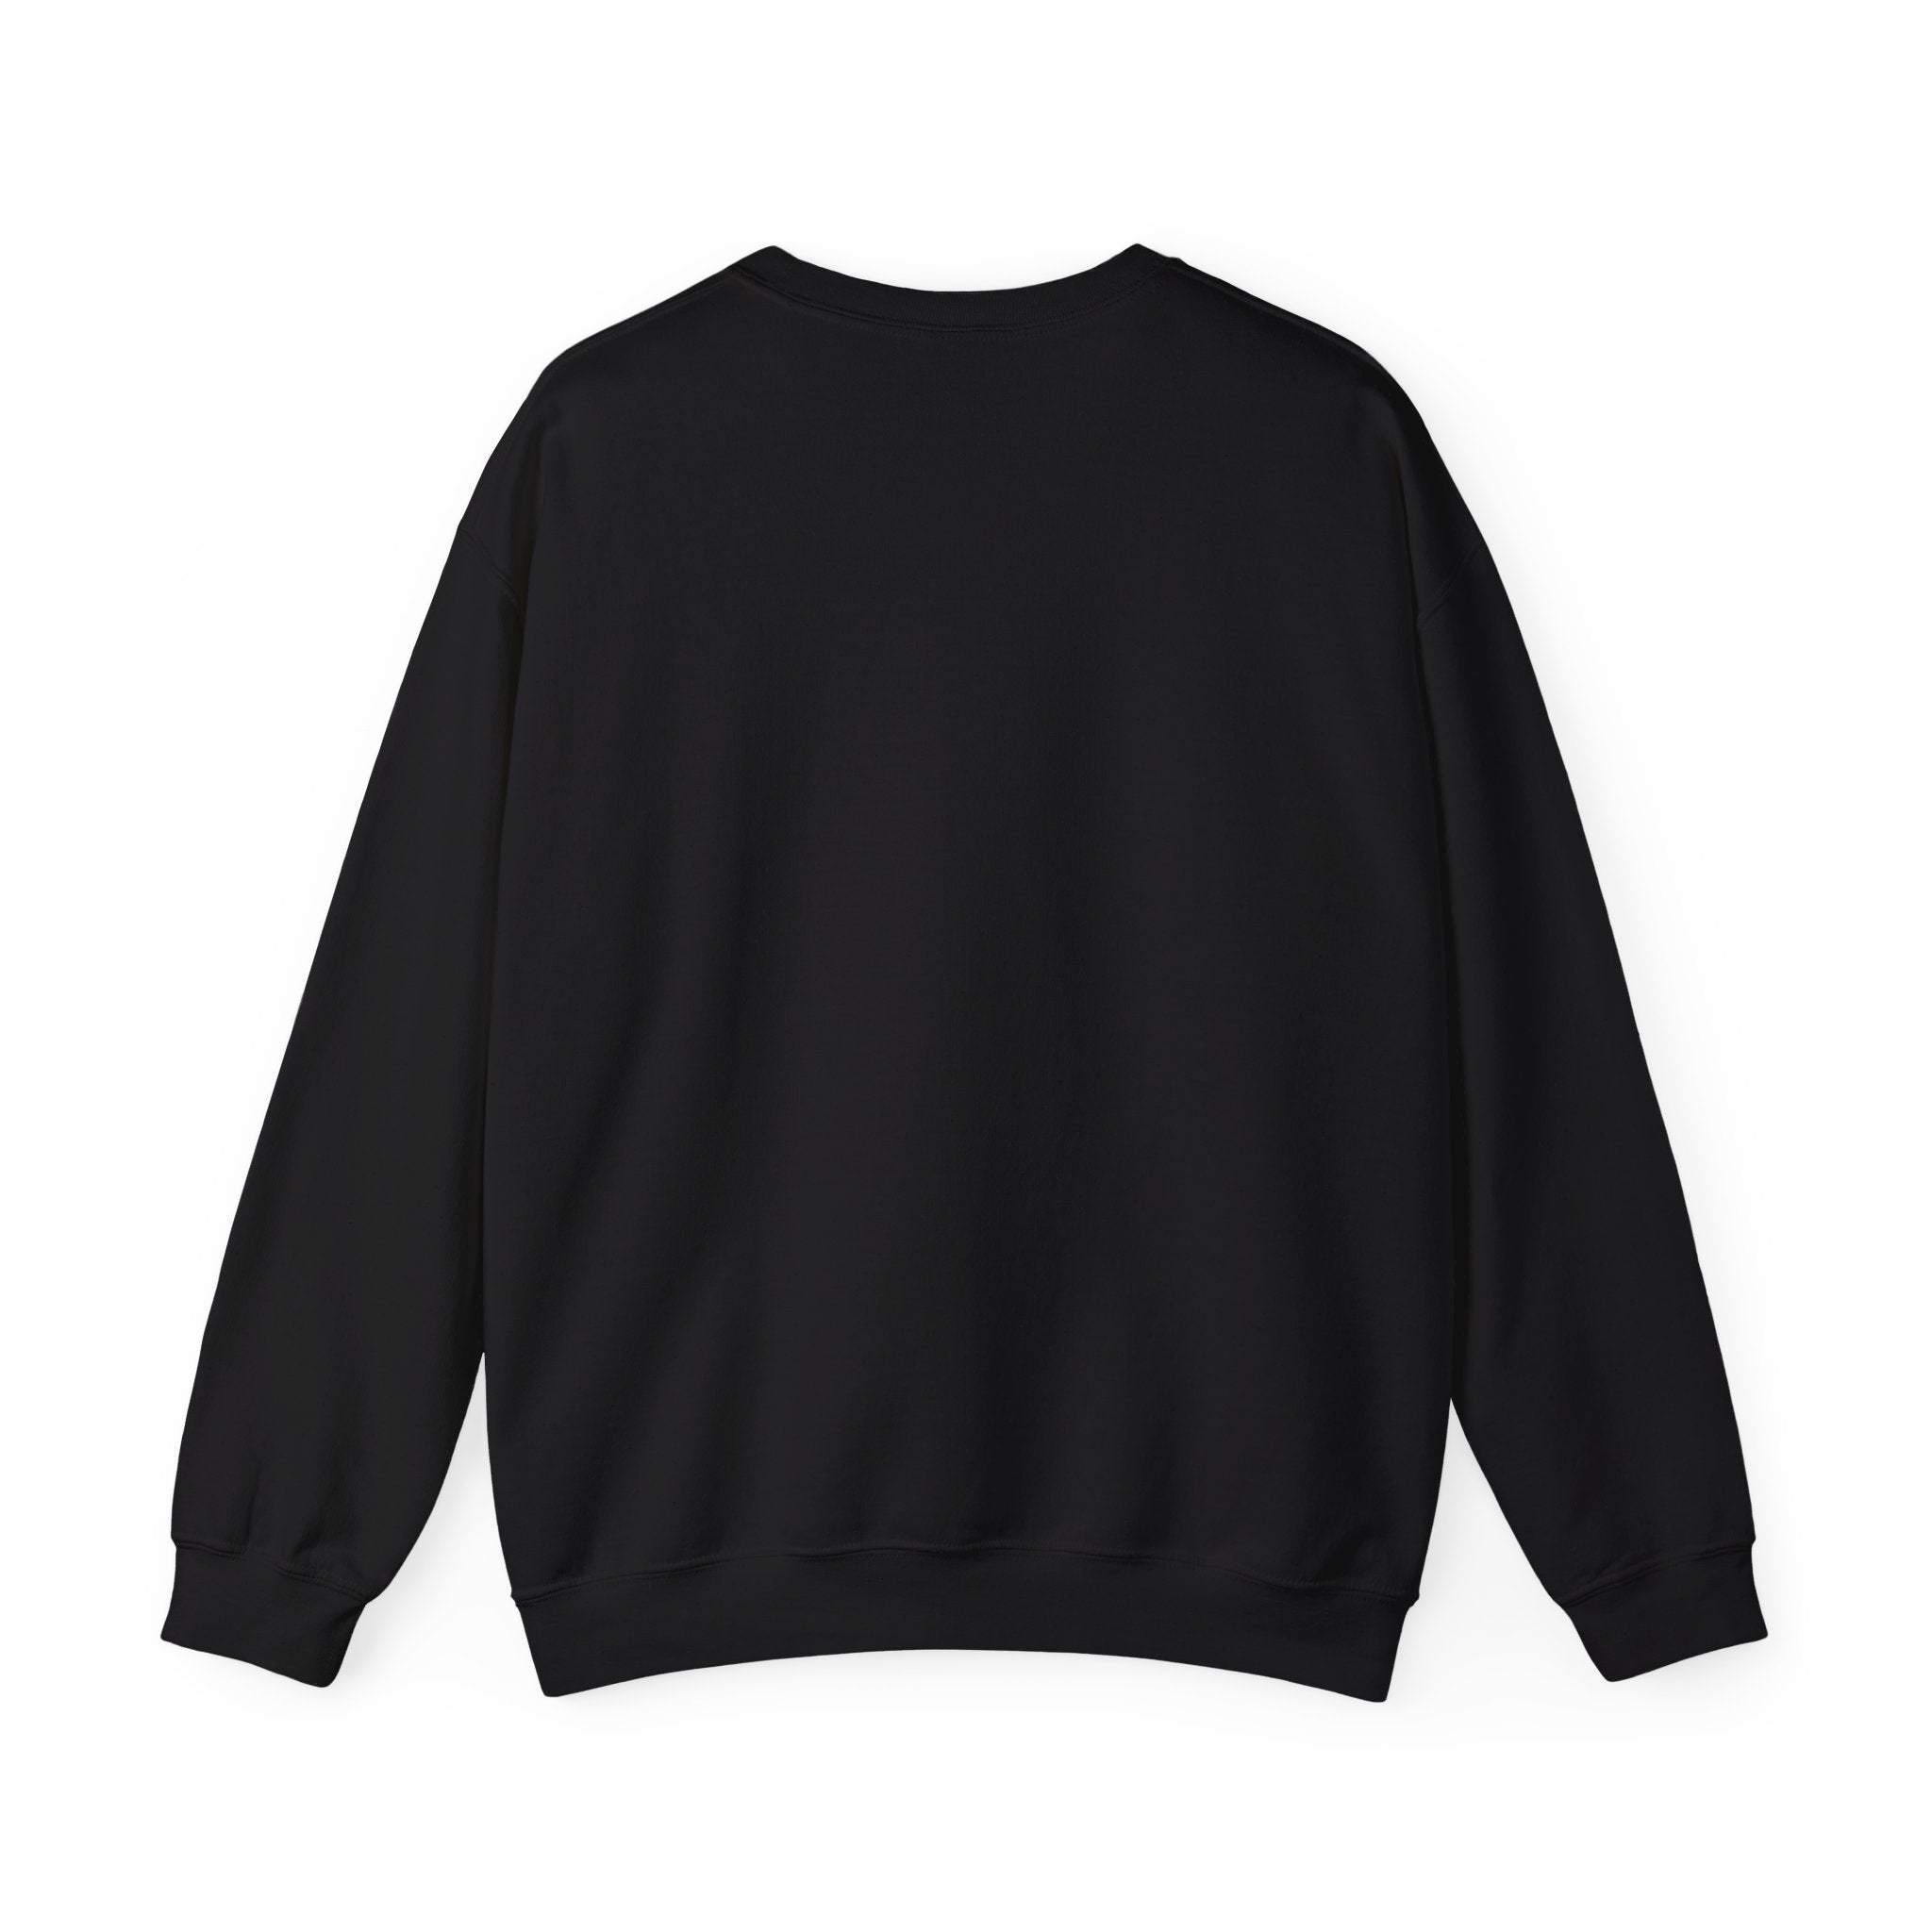 Black LA-TI-NA - Sweatshirt lying flat, showcasing the back—a true winter essential for ultimate comfort.